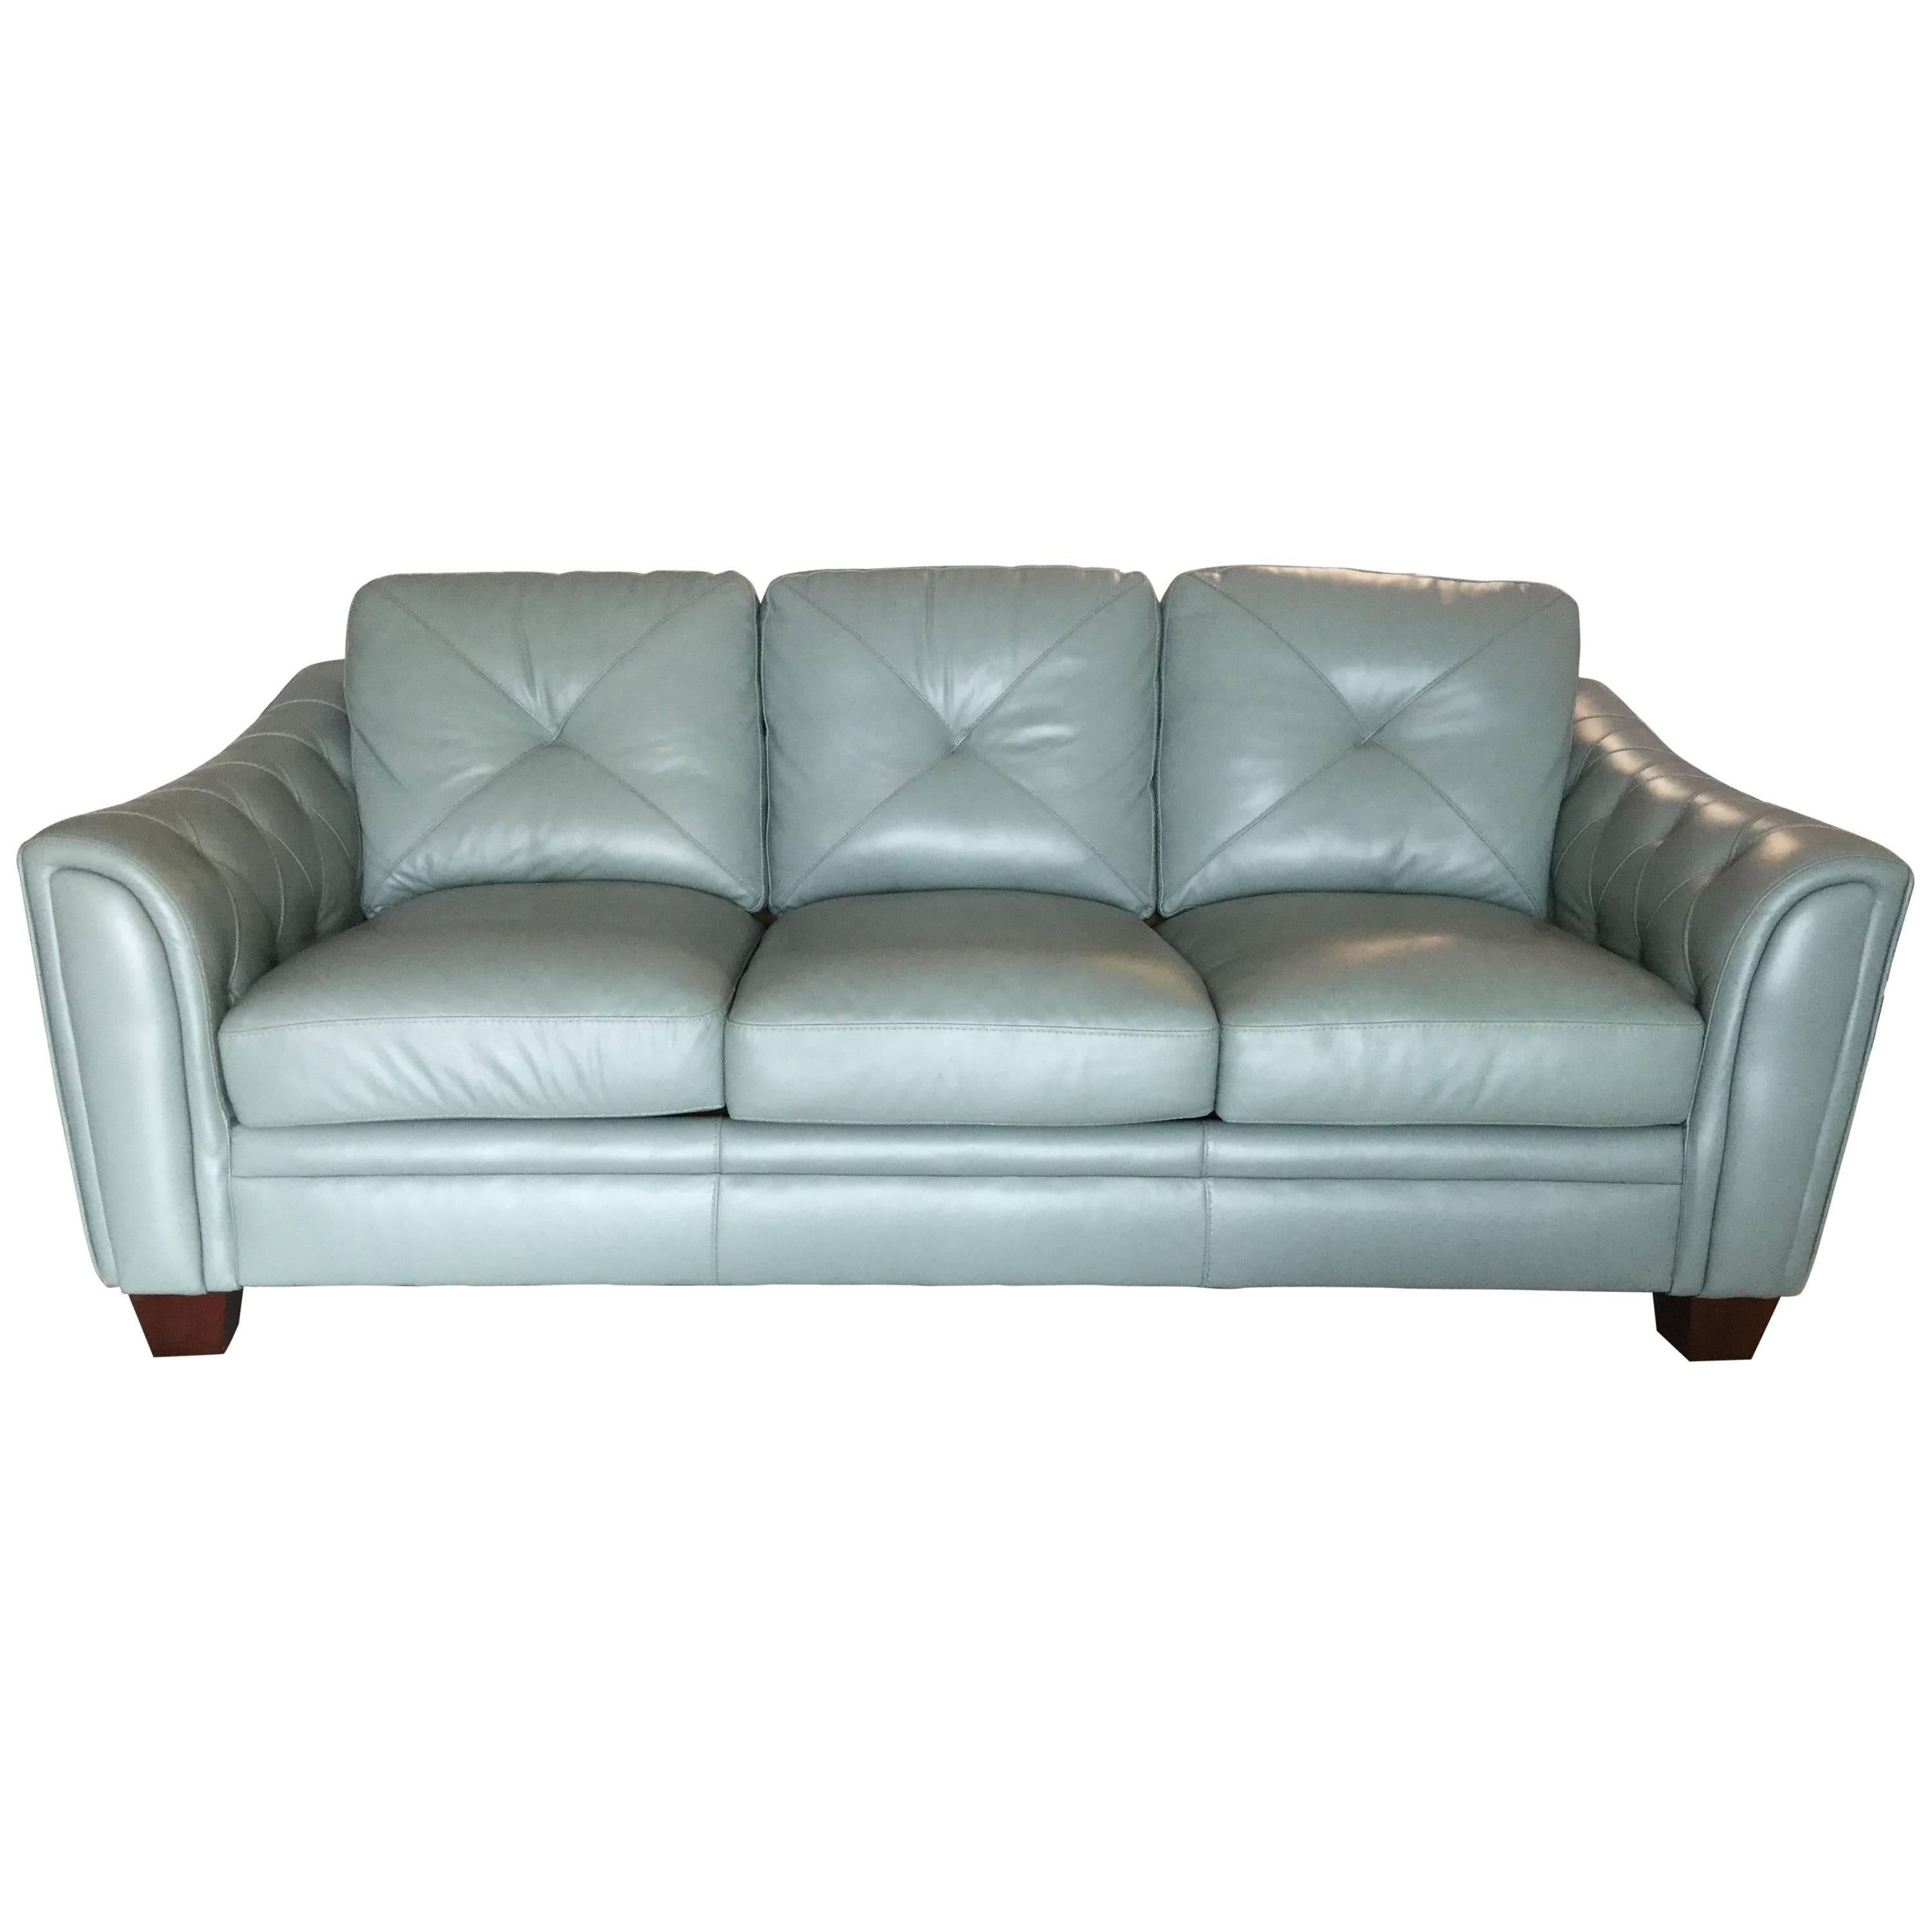  Palm Beach Teal Blue Leather Contemporary Sofa